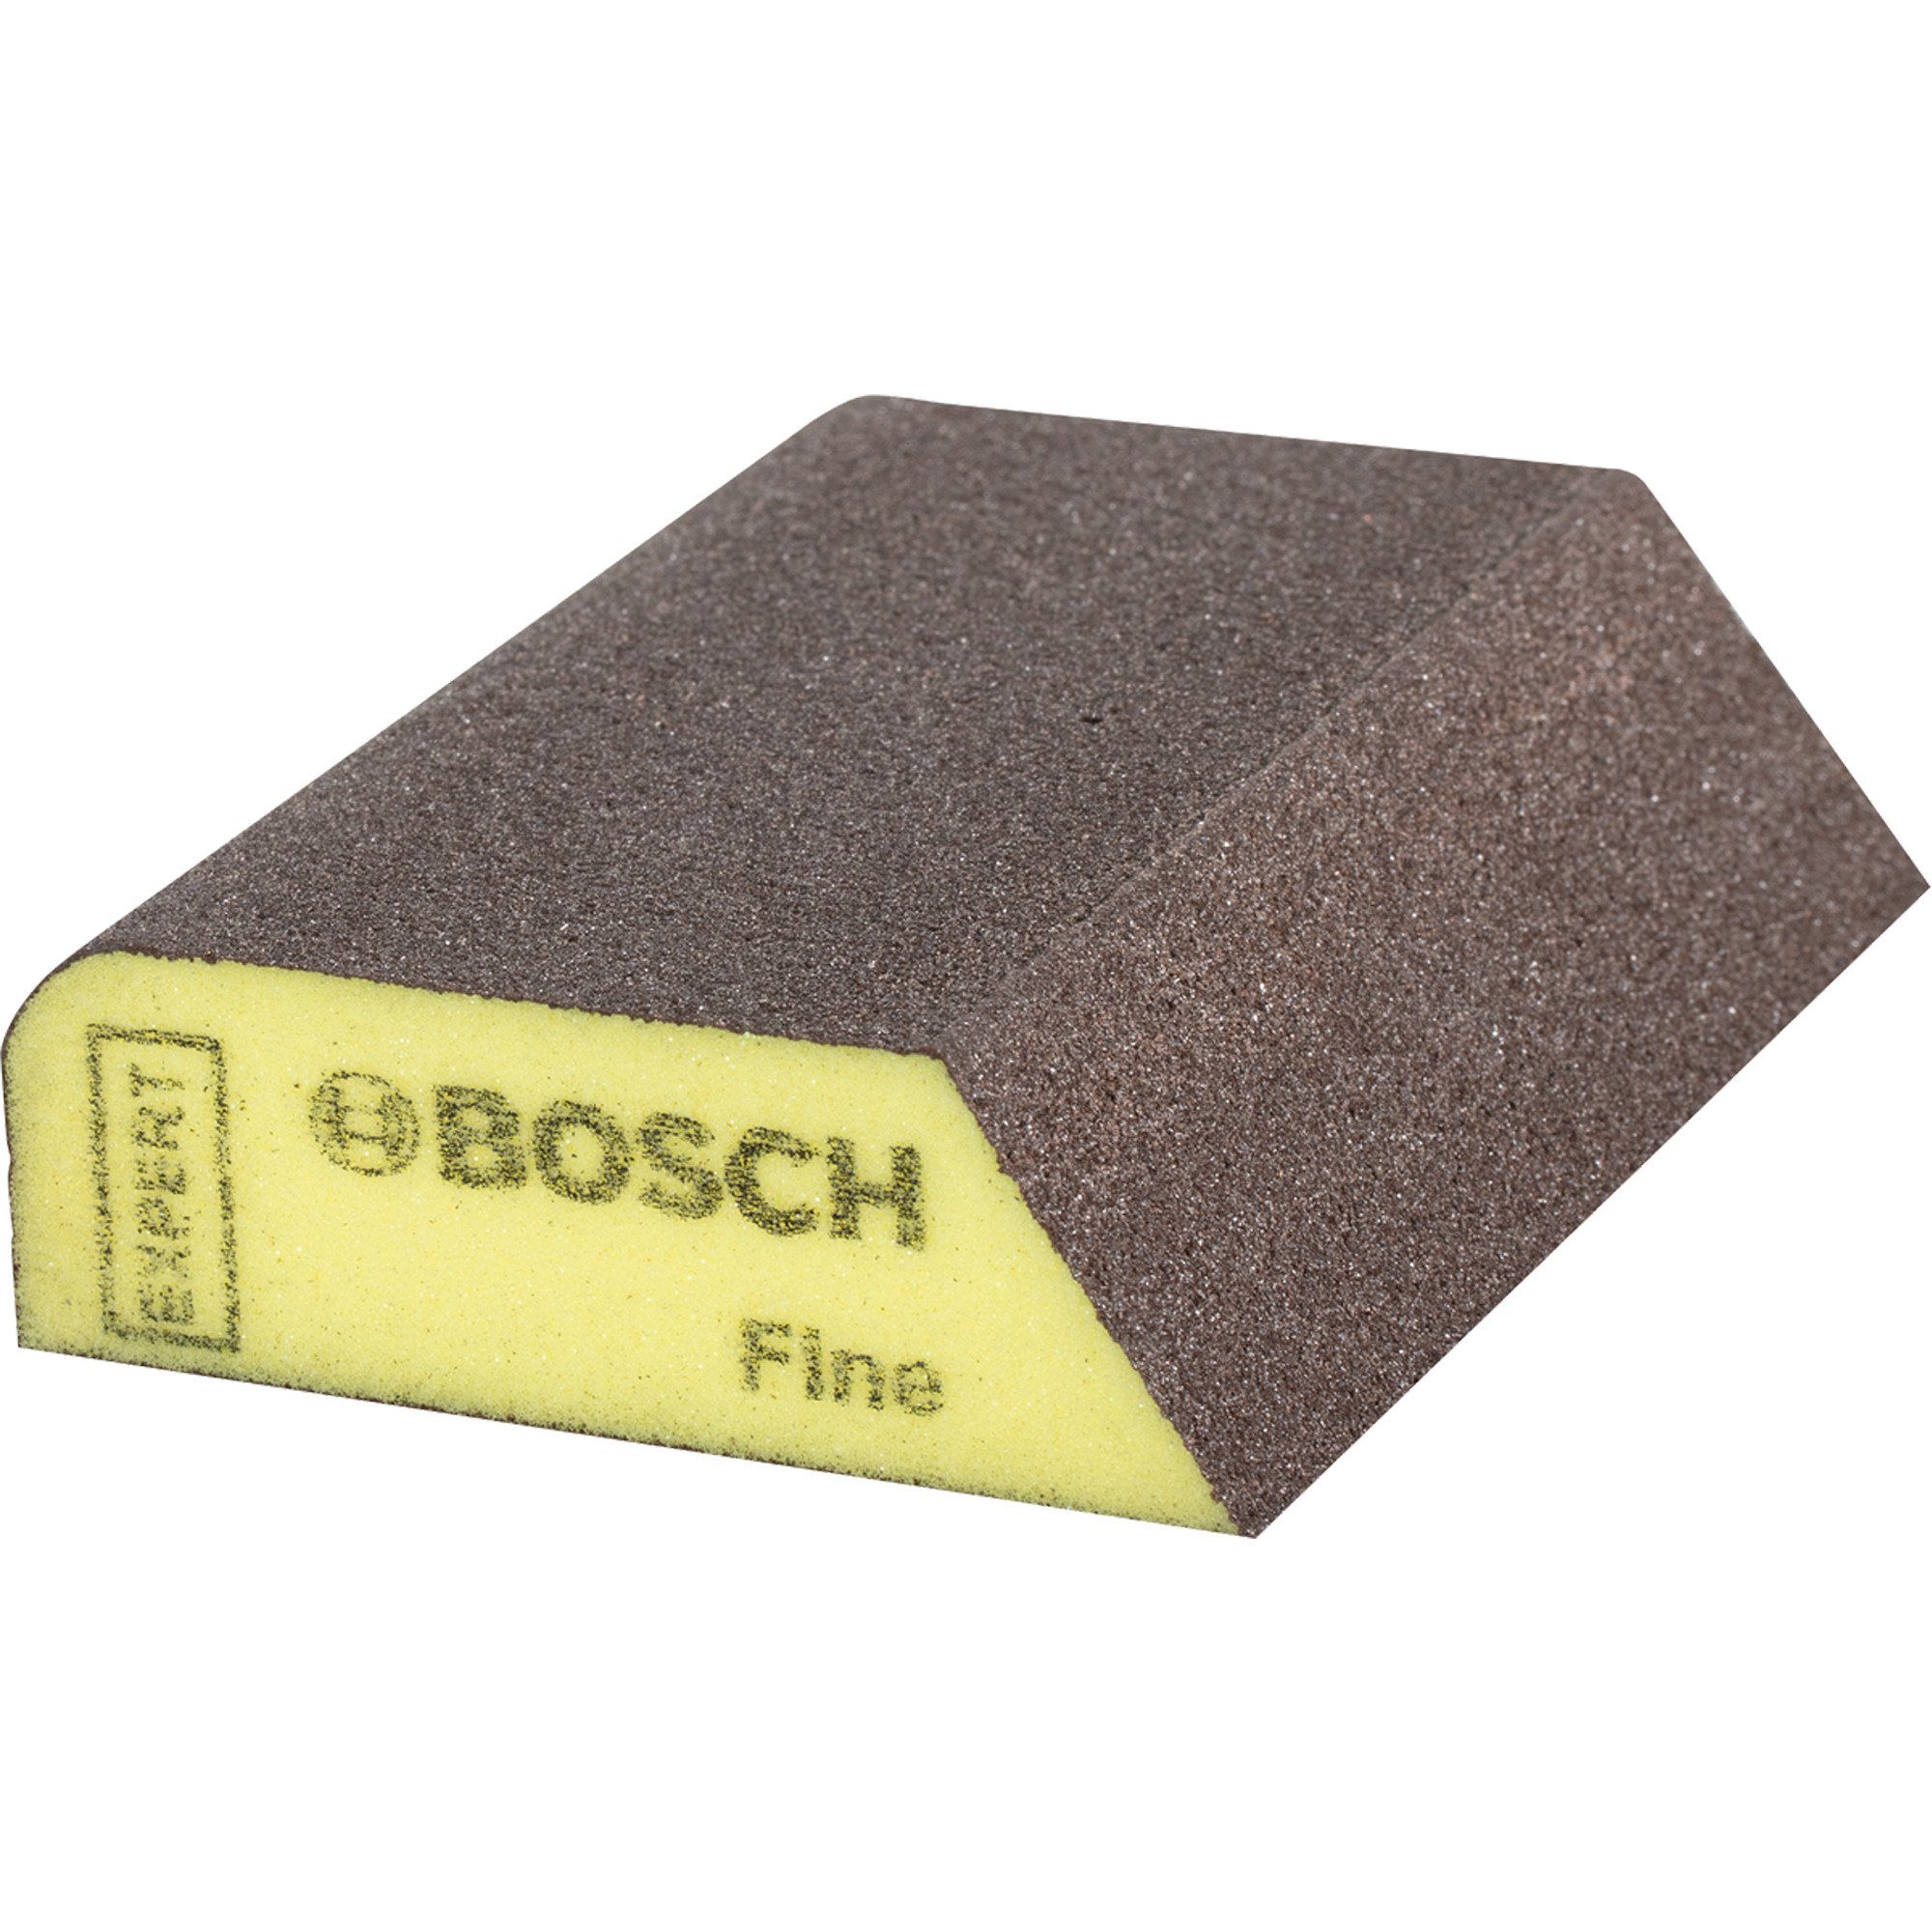 BOSCH Combi Expert S470 Bosch Professional Schleifblock Schleifscheibe